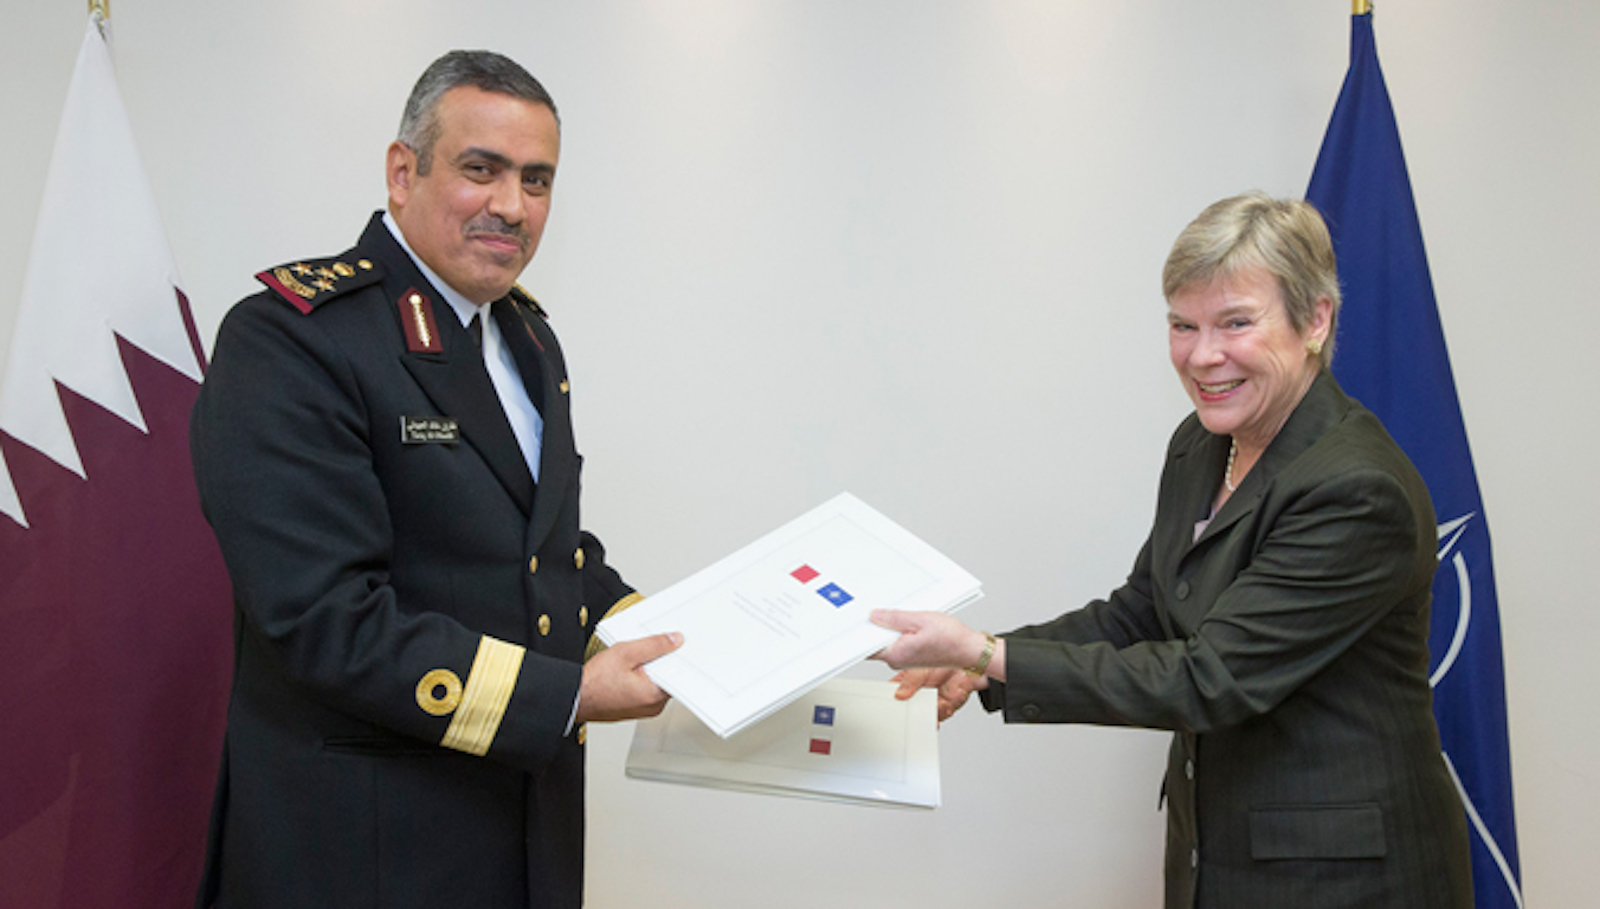 Qatari Brigadier General Tariq Khalid M. F. Alobaidli and NATO Deputy Secretary General Rose Gottemoeller signed a security agreement